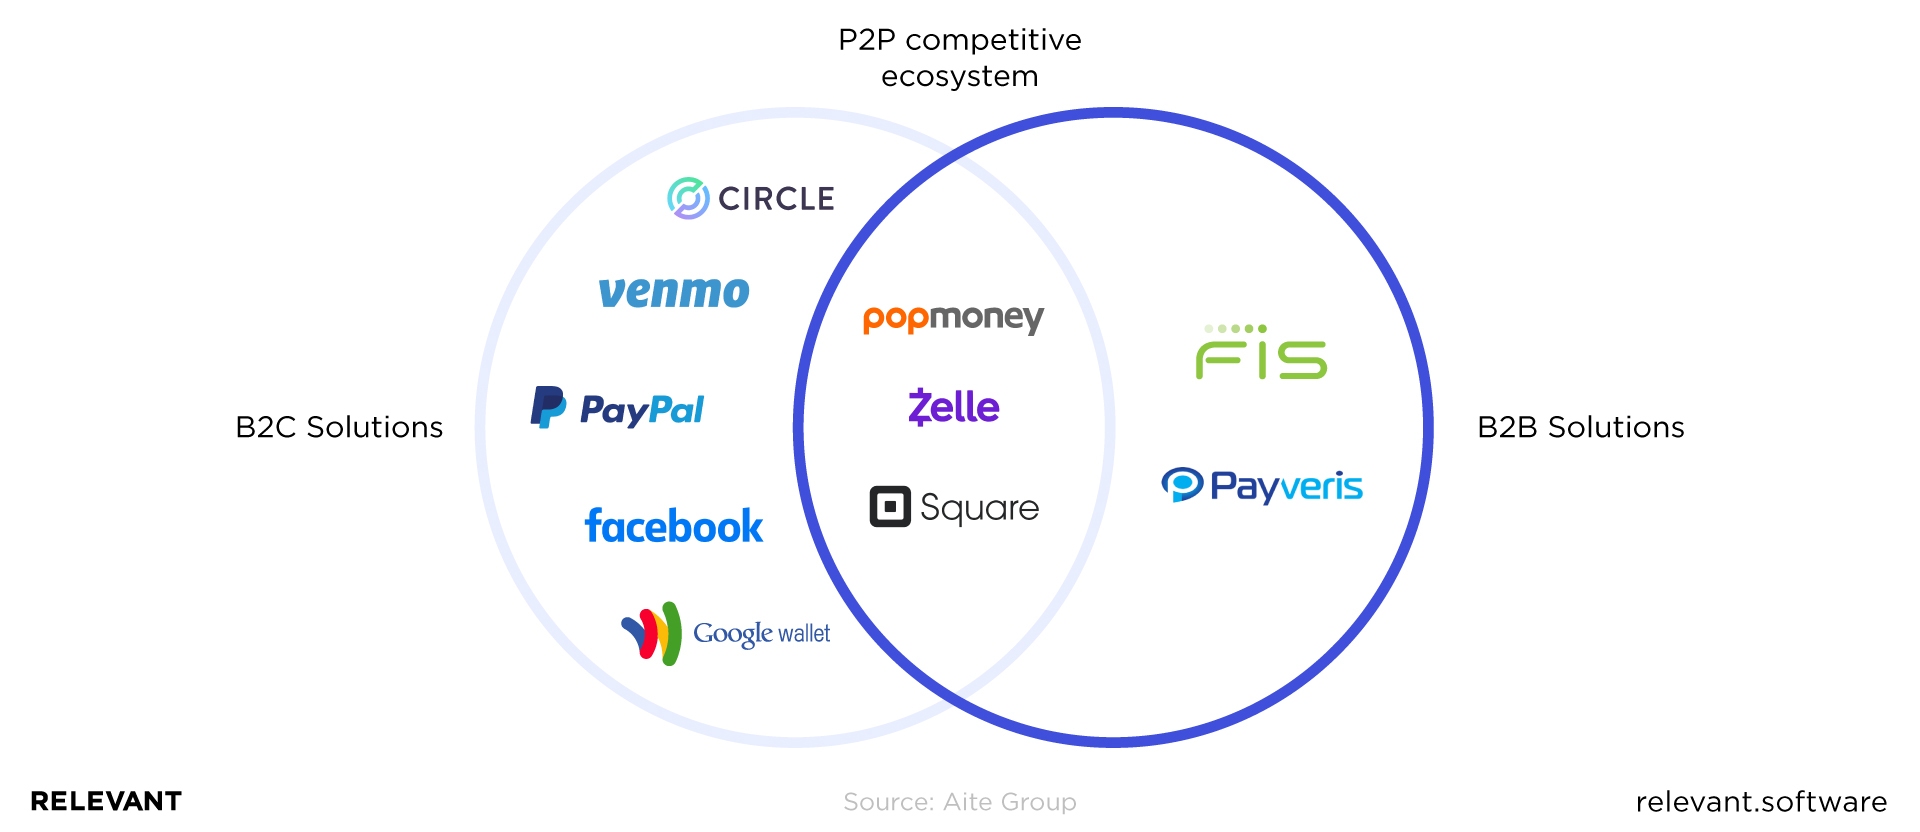 p2p competitive ecosystem